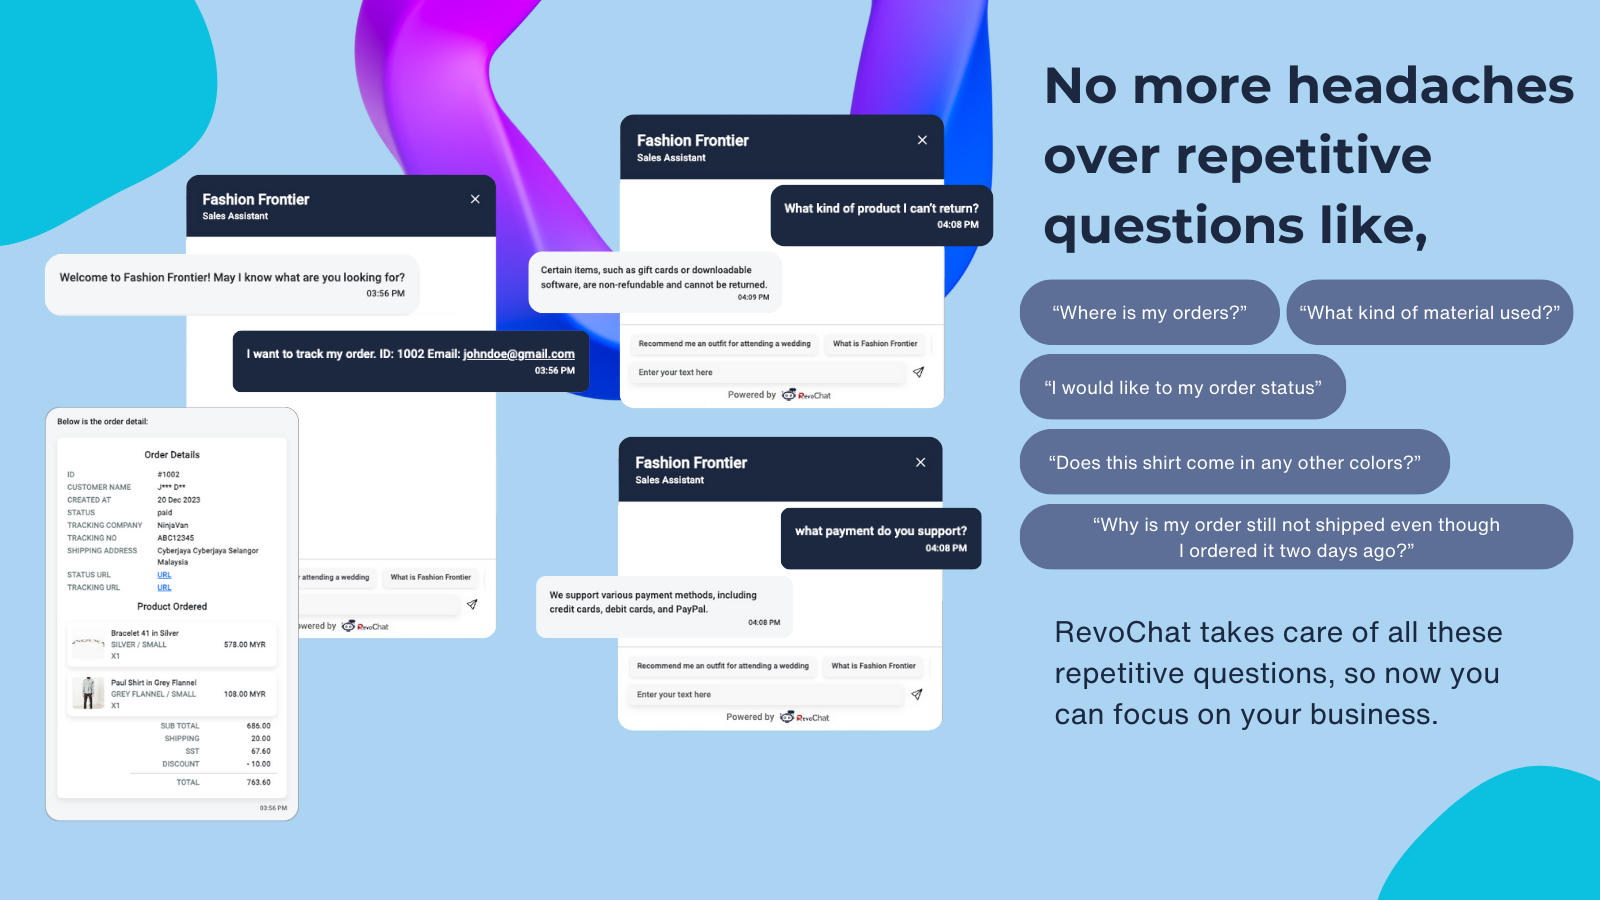 RevoChat解决了您所有重复和令人头疼的问题